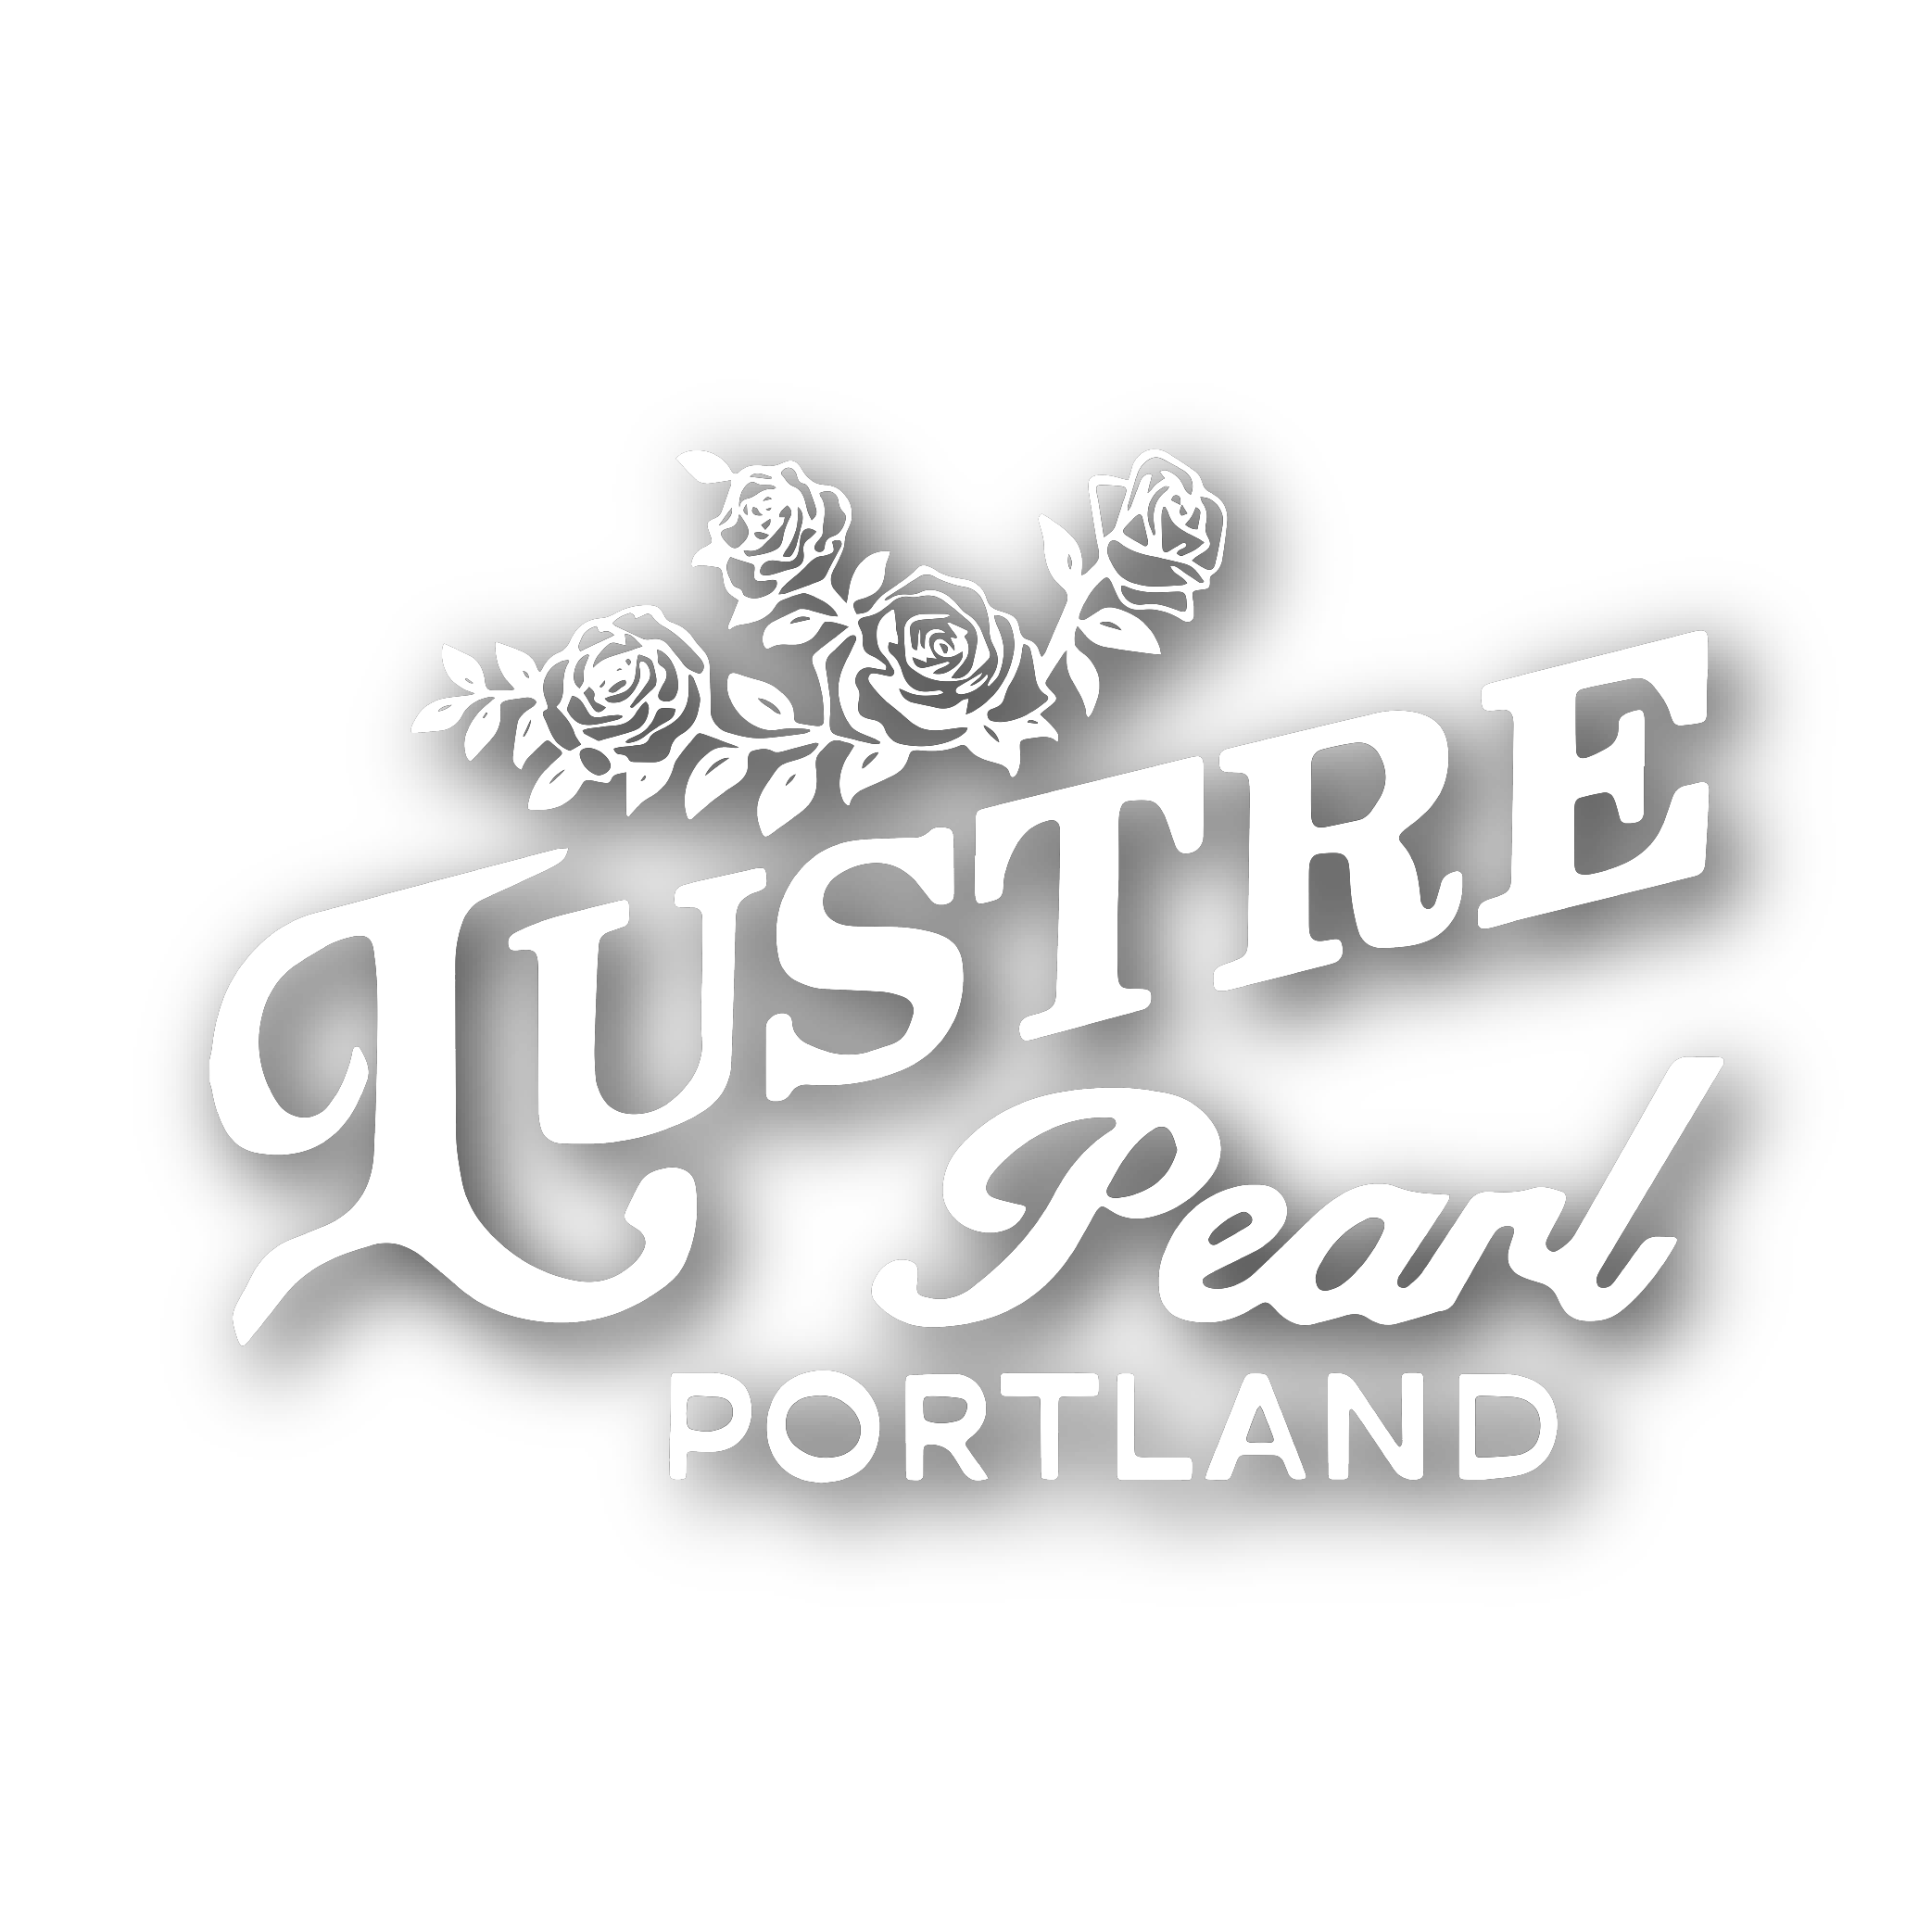 Lustre Pearl Portland